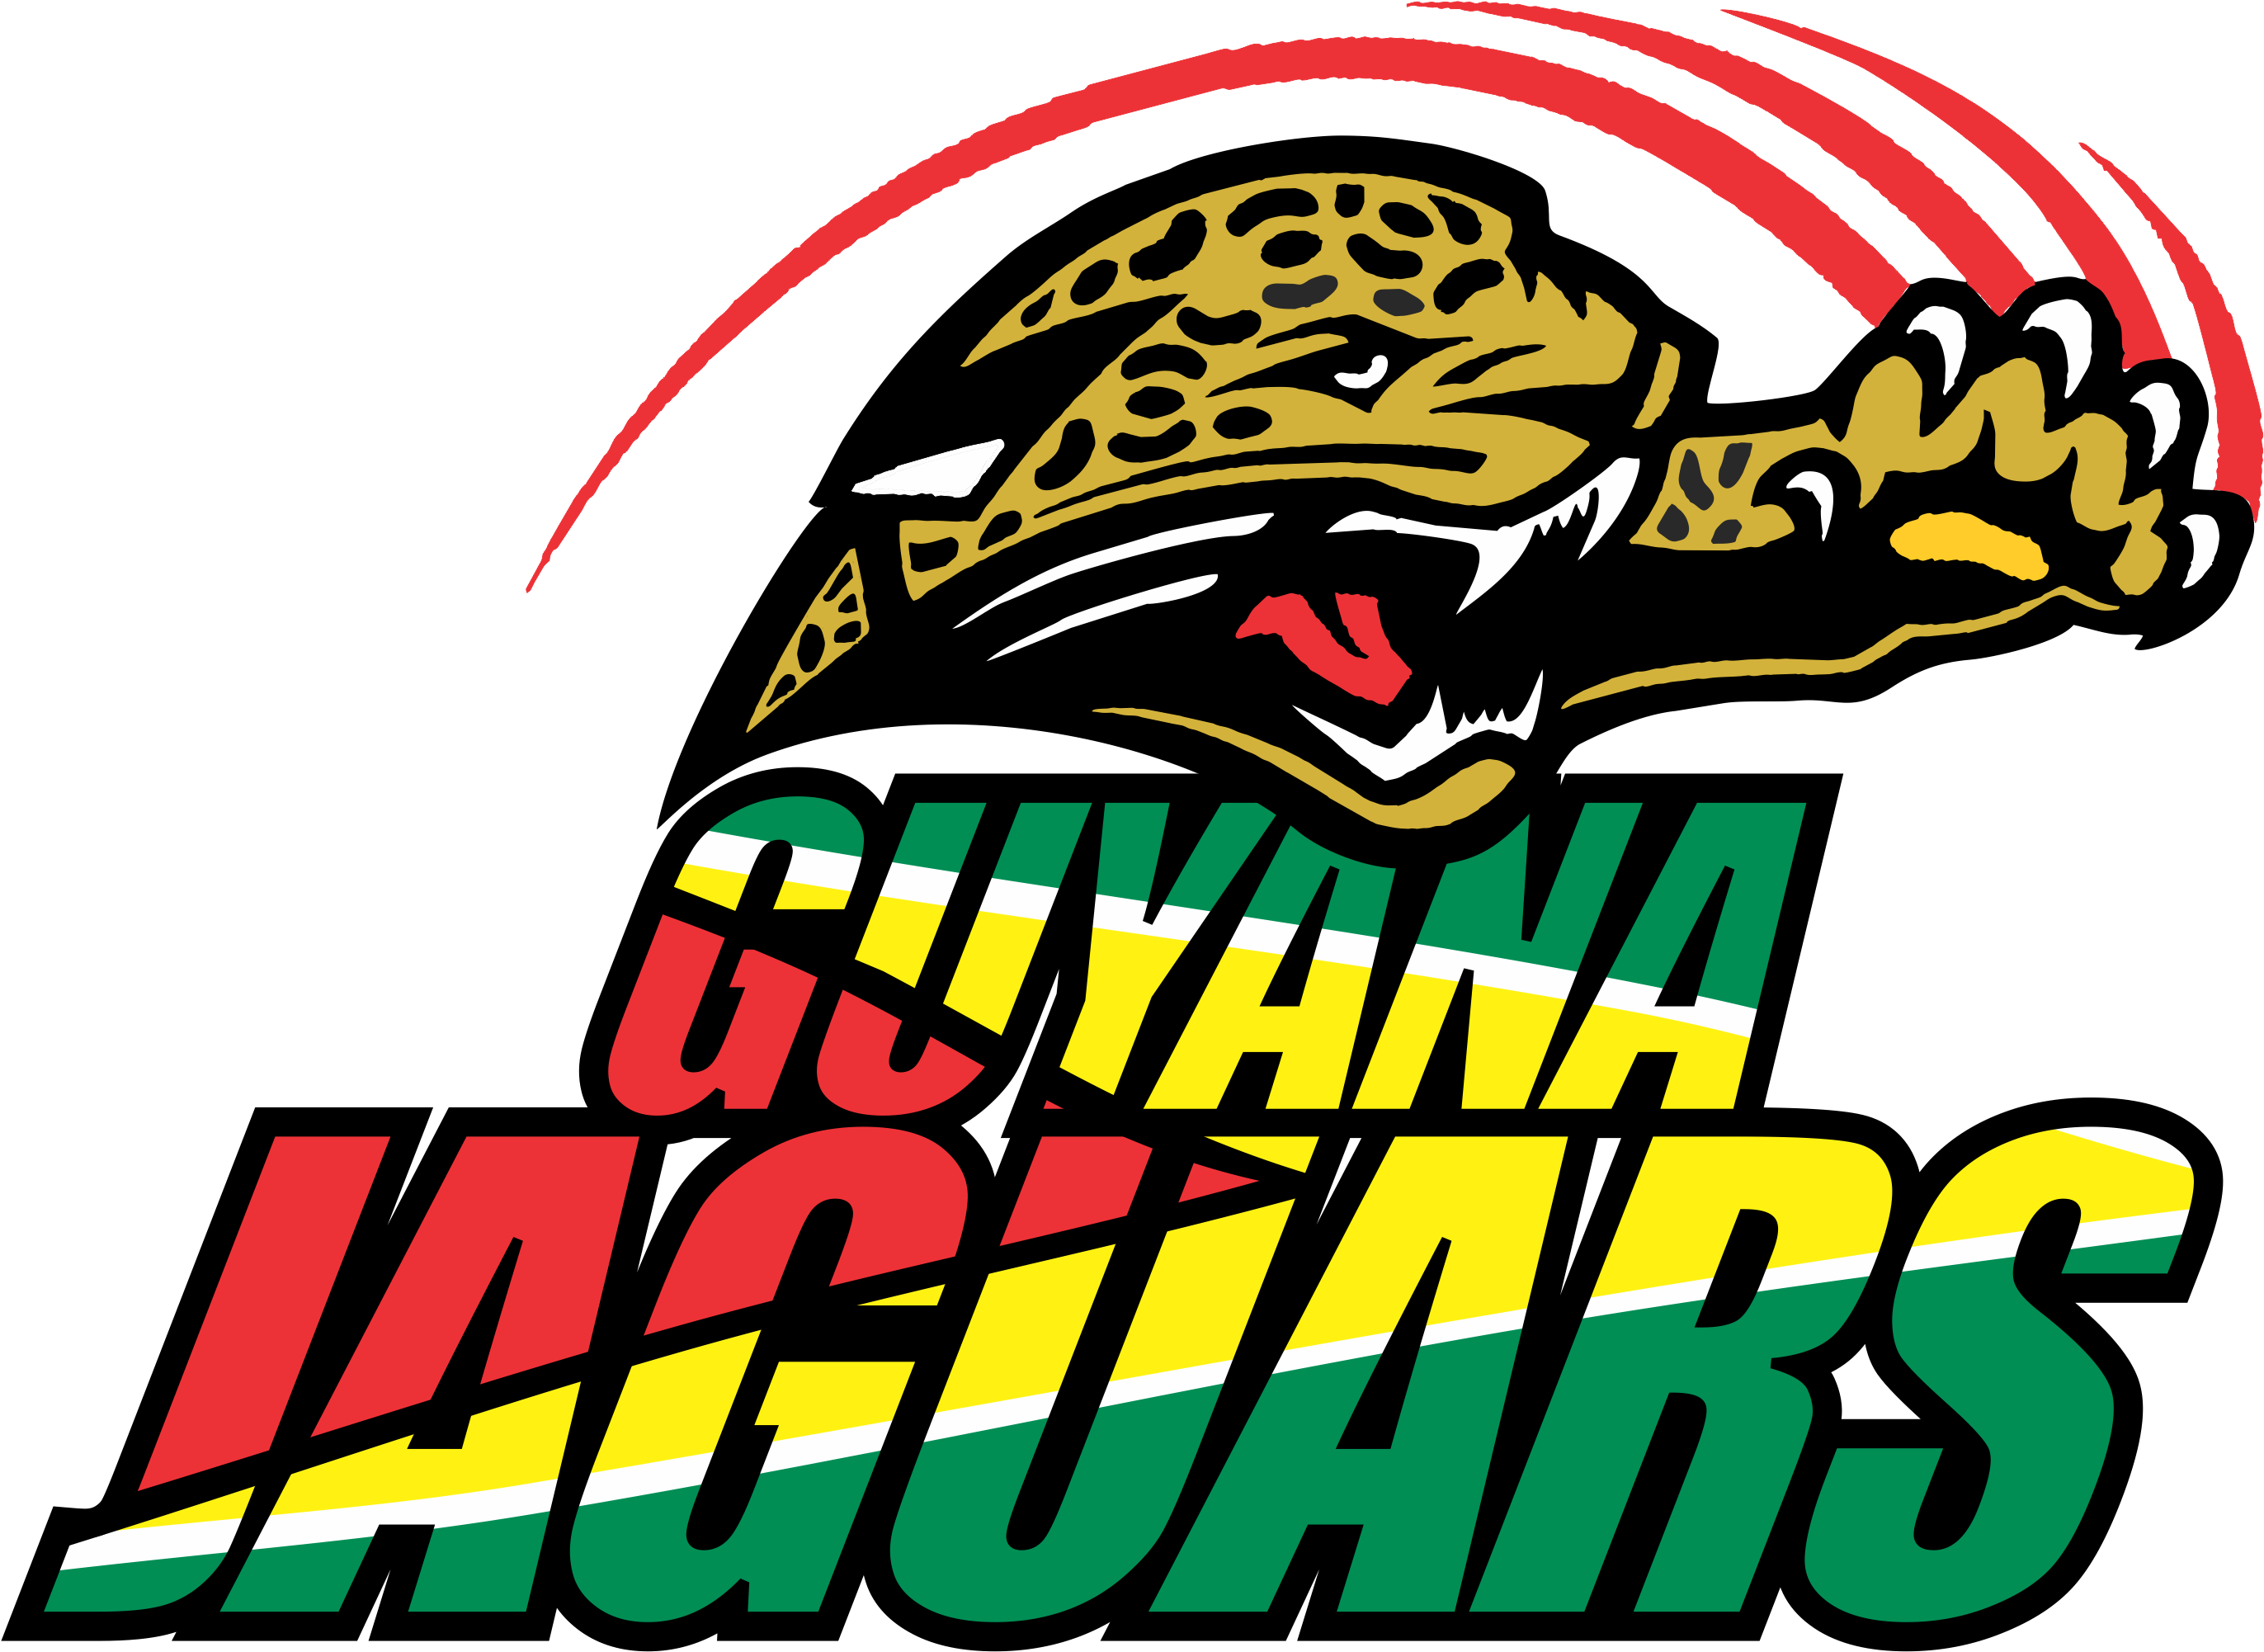 Jaguars Trials Set To Select National 50-over Team - Guyana Jaguars Cricket Team (2900x2177)